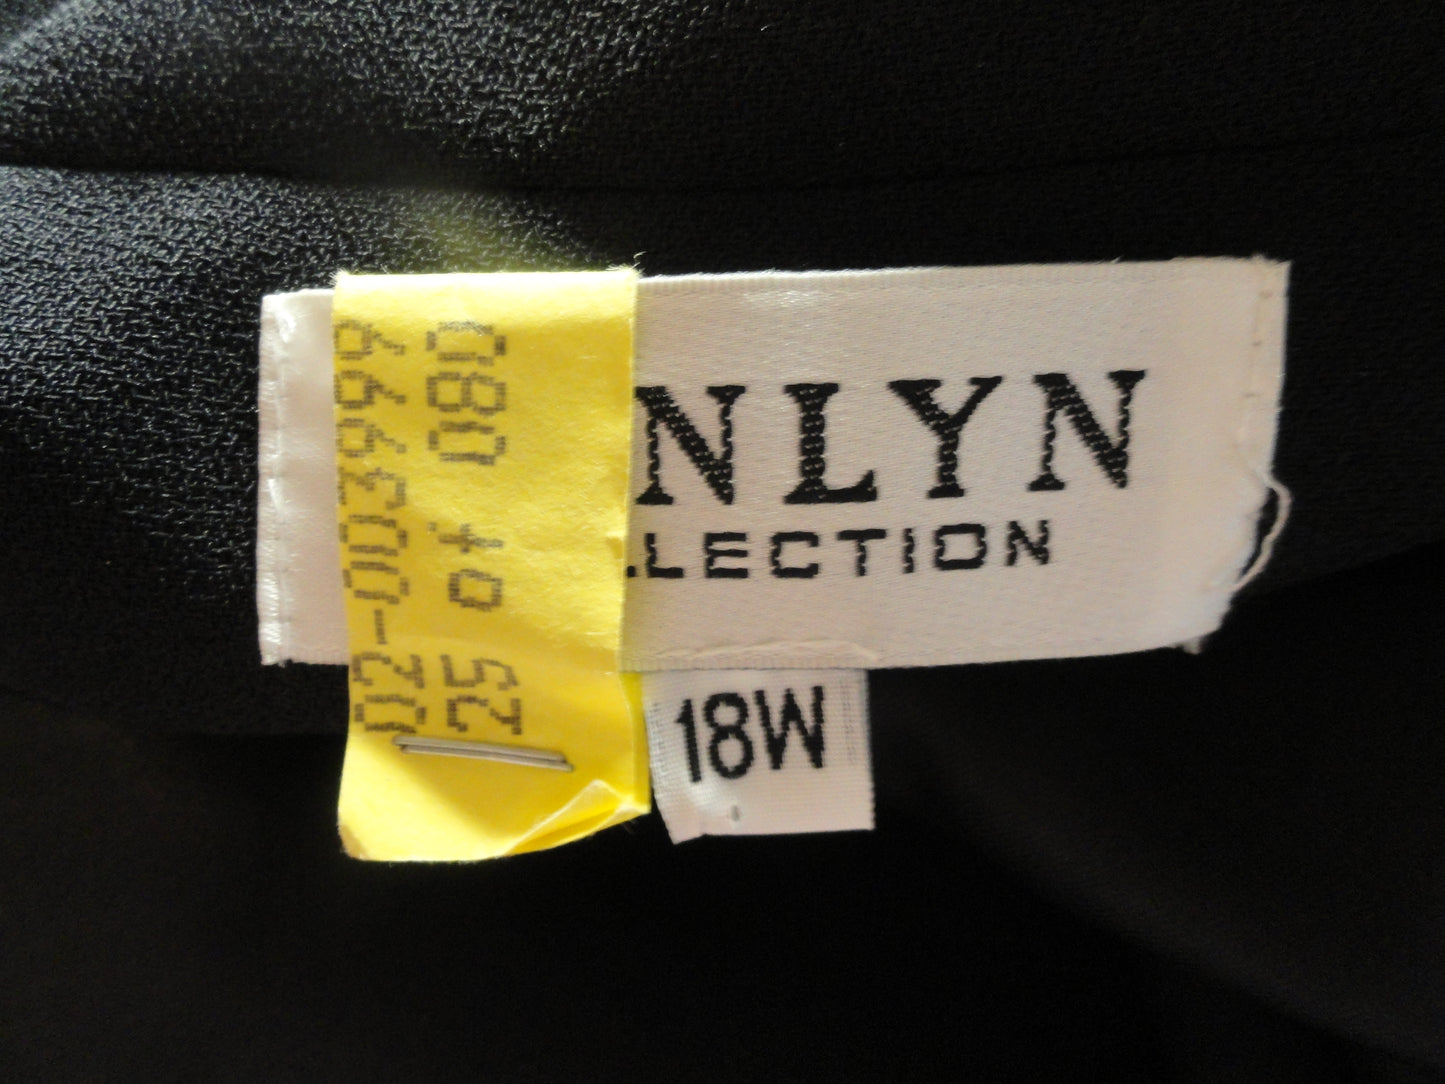 Renlyn Collection Blazer Black 18W SKU 000293-2